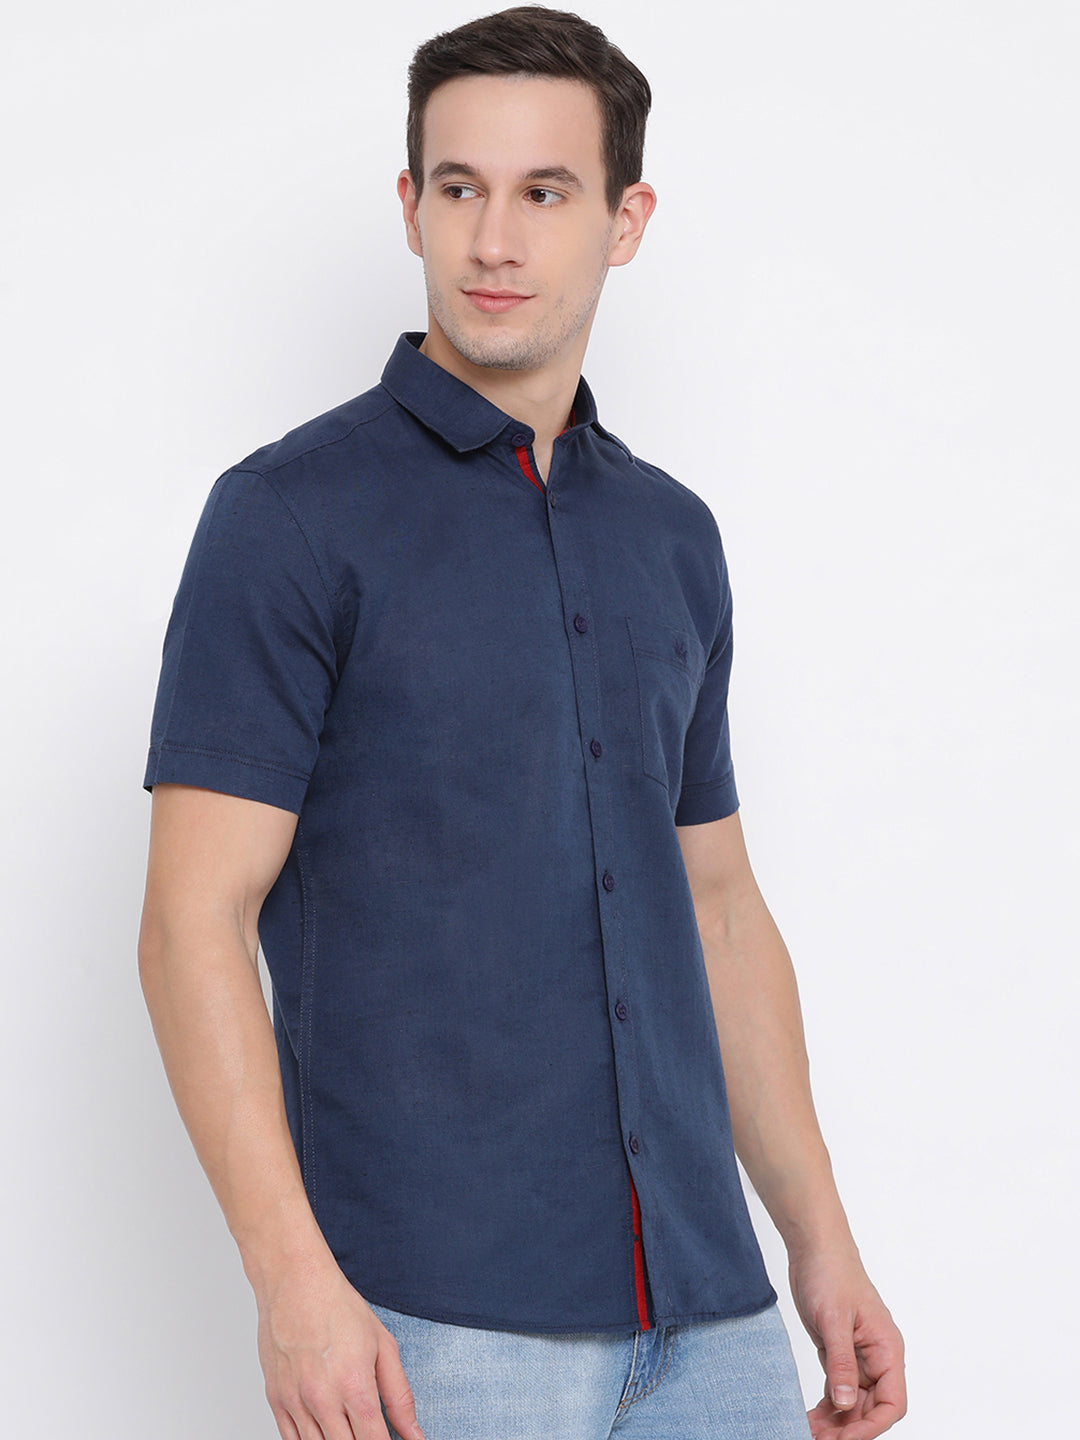 Navy Blue Spread Collar Slim Fit Shirt - Men Shirts